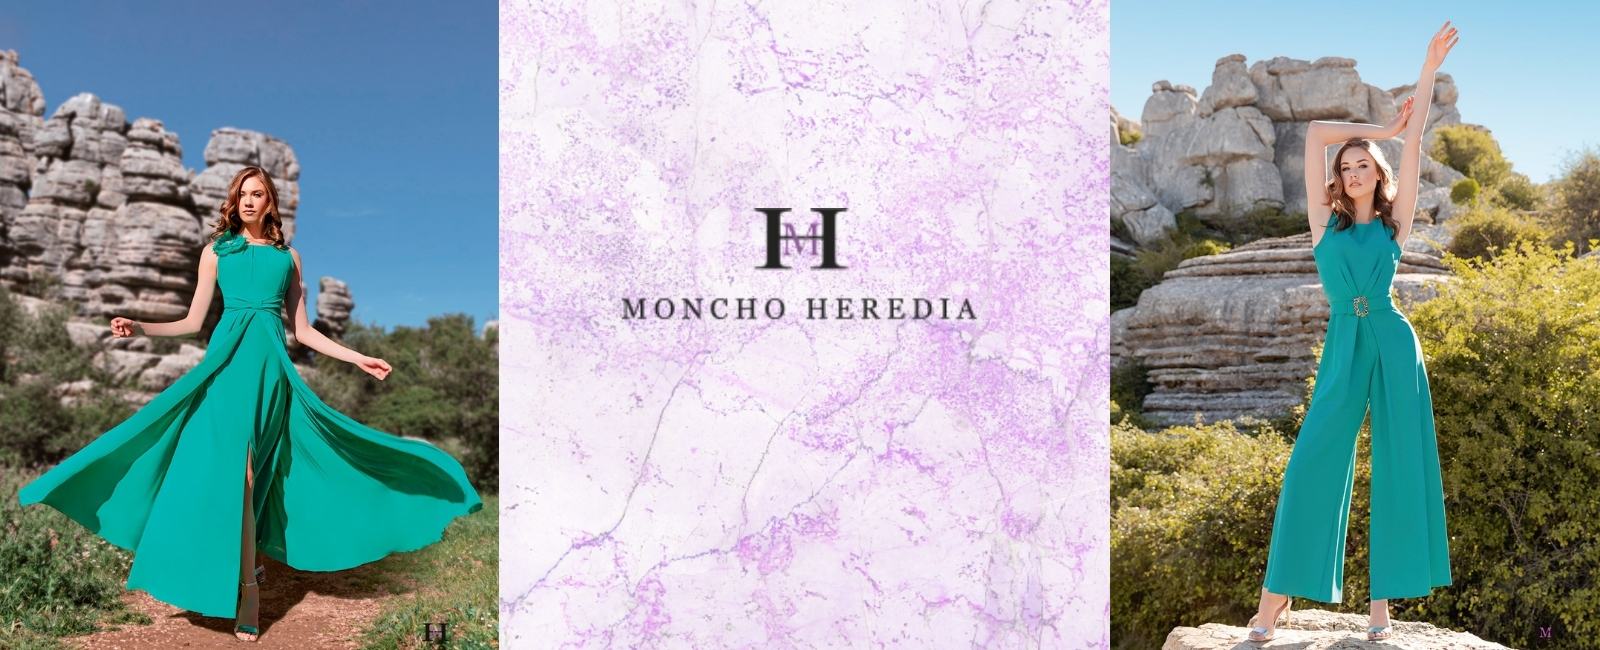 moncho-heredia-definitivo